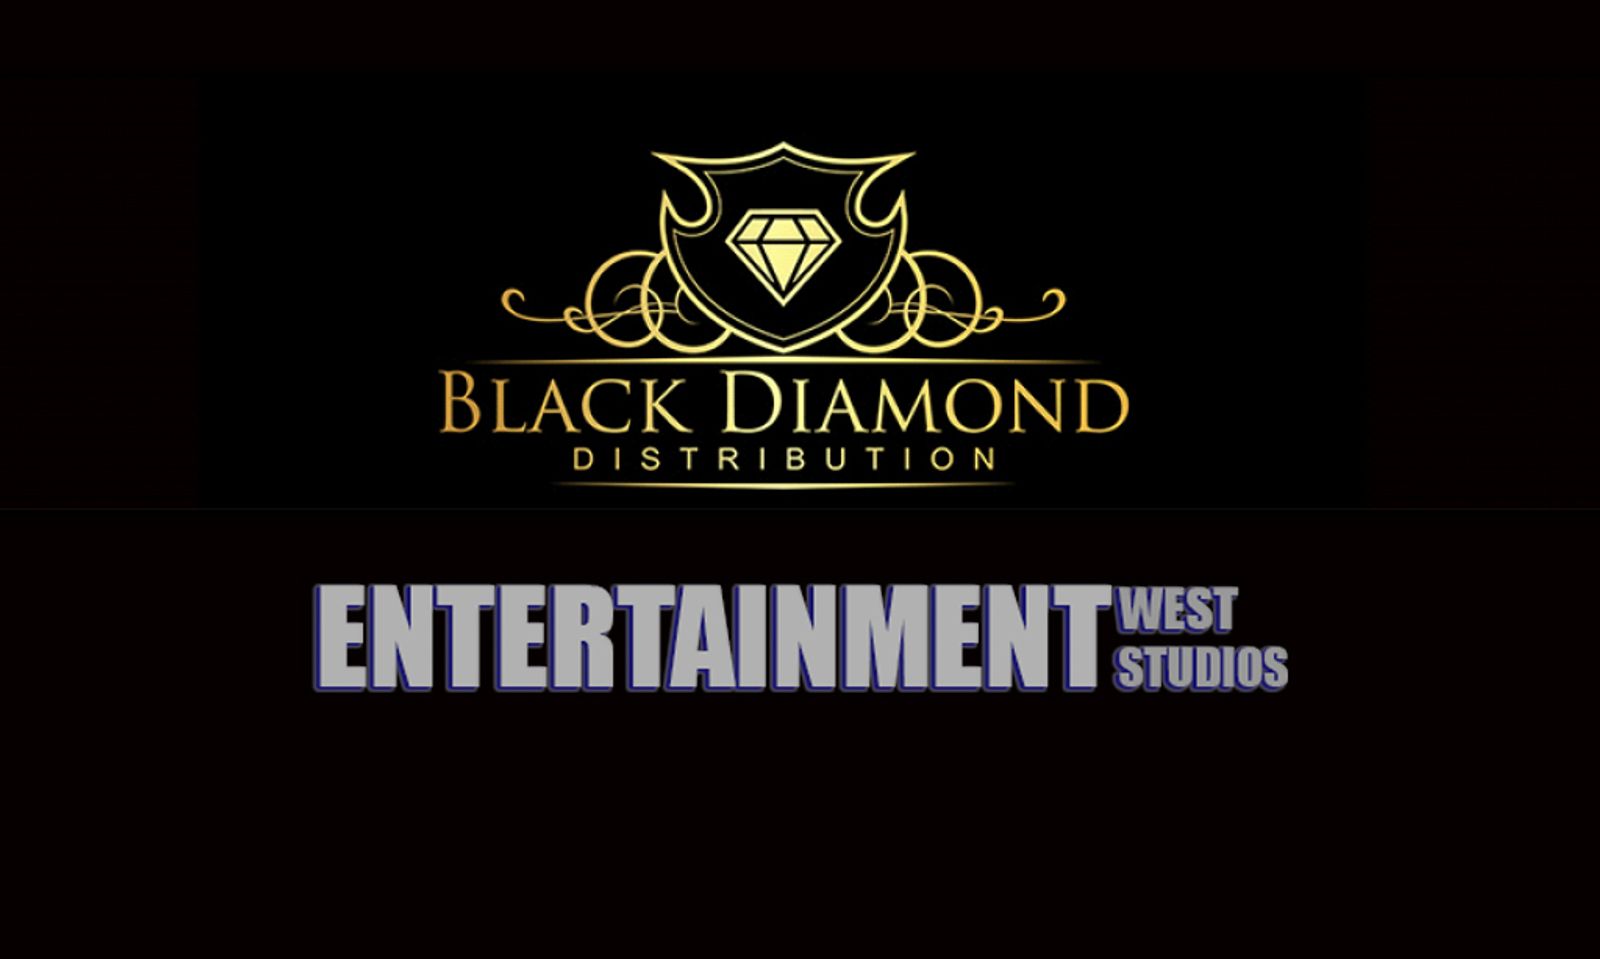 Entertainment West Studios Signs Distro Deal With Black Diamond